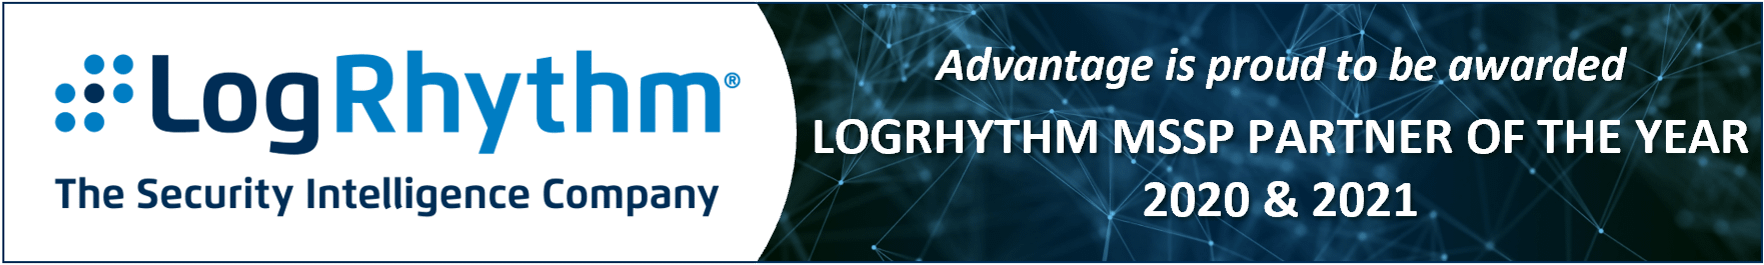 LogRhythm MSSP Partner